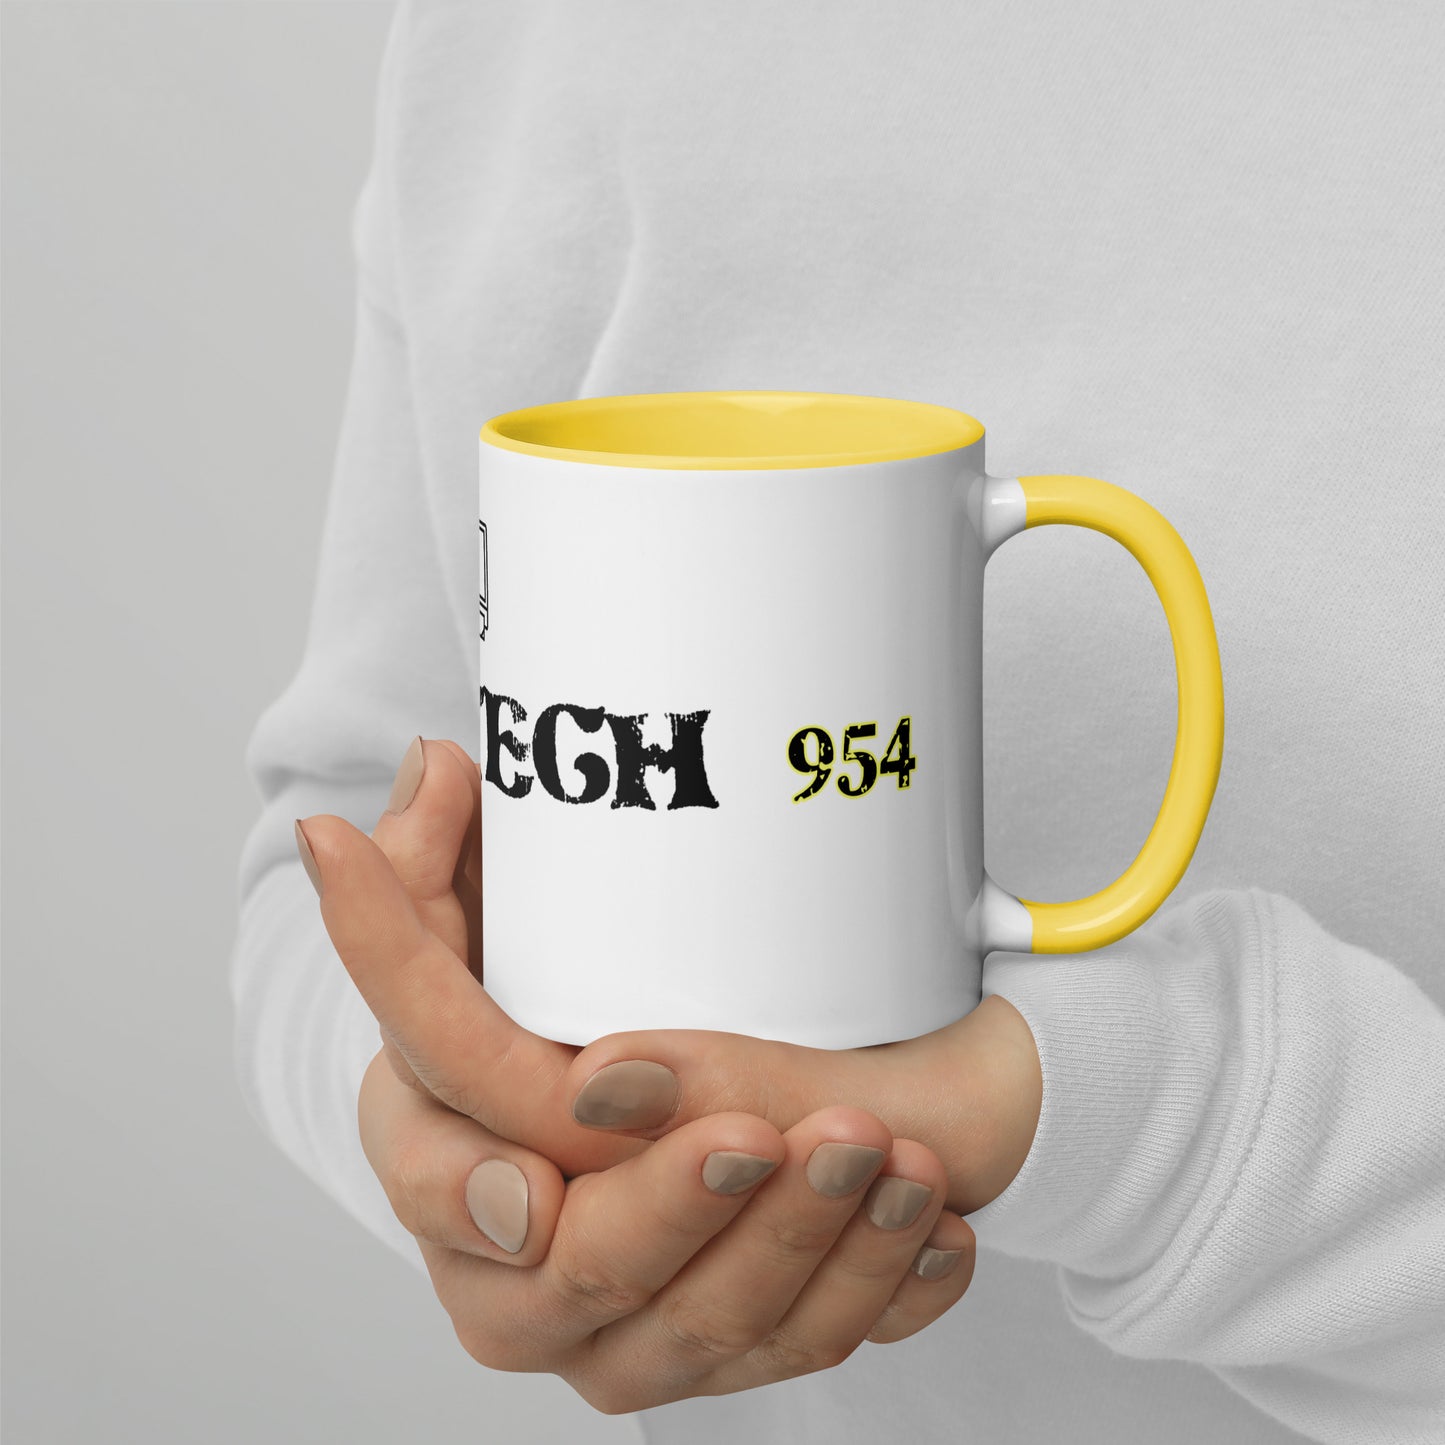 The Tech 954 Signature Mug with Color Inside